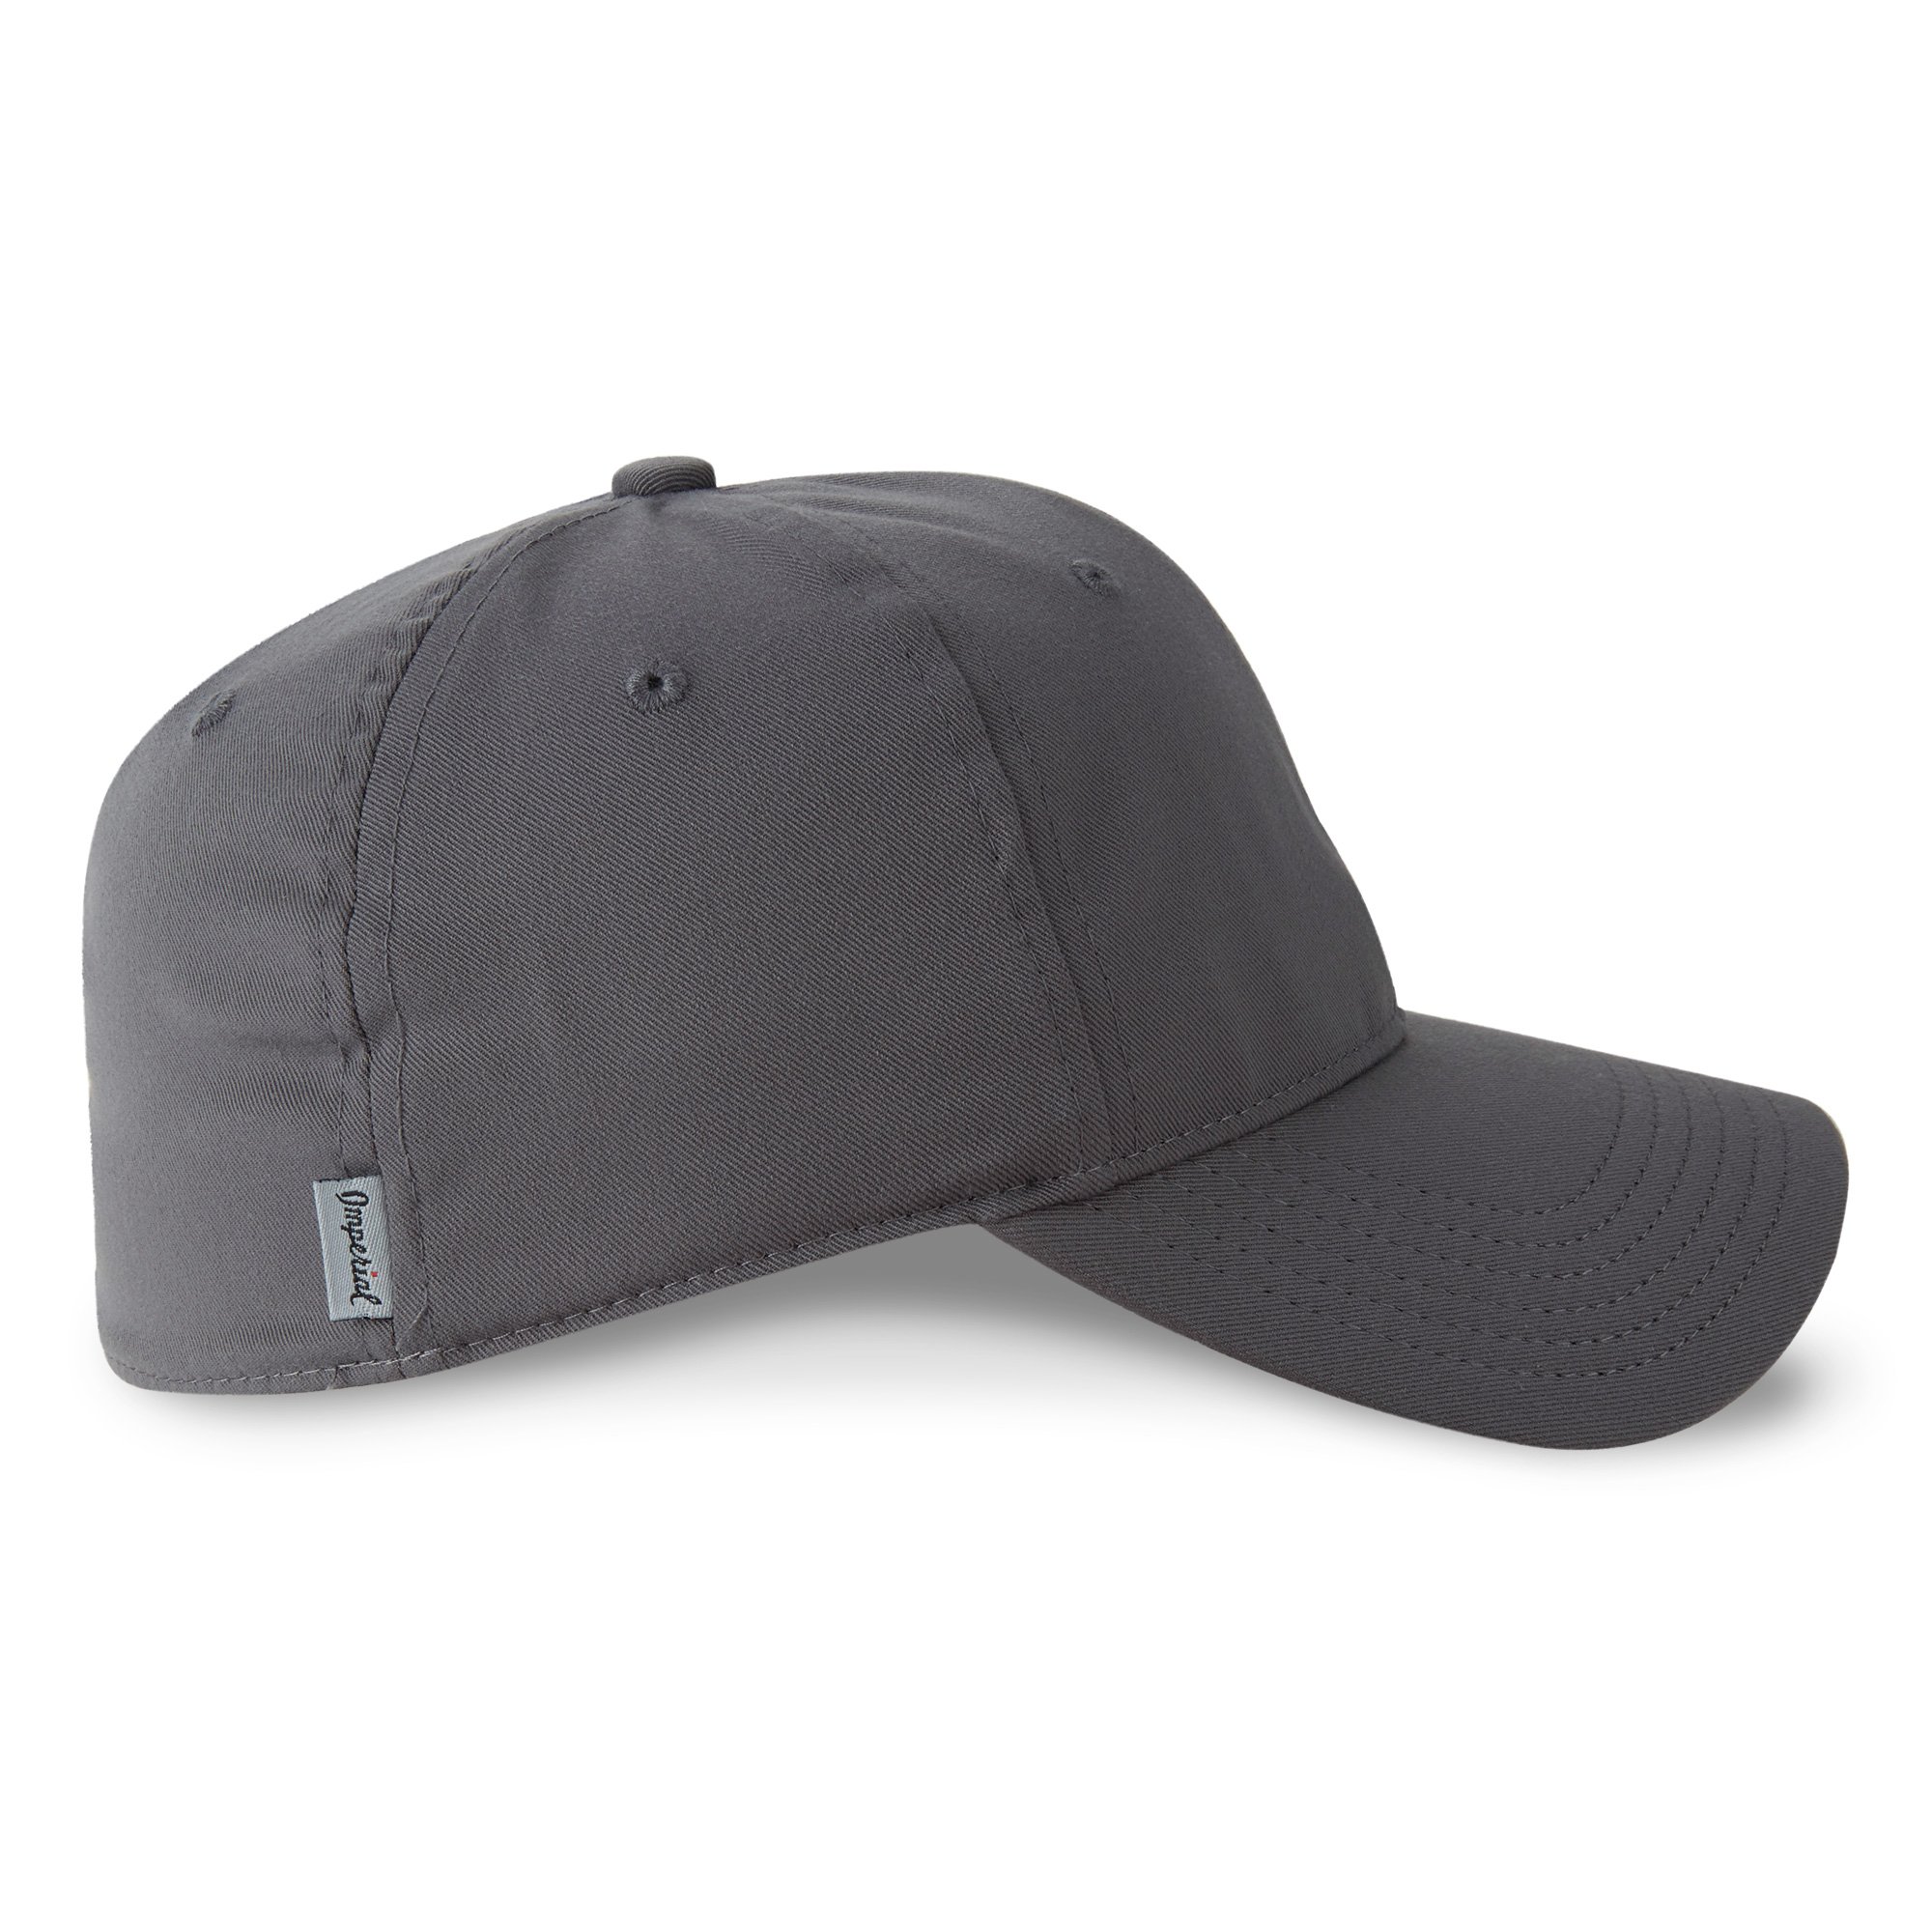 The Encore 2100 - Lightweight Stretch Cotton, Flexible Fit Hat